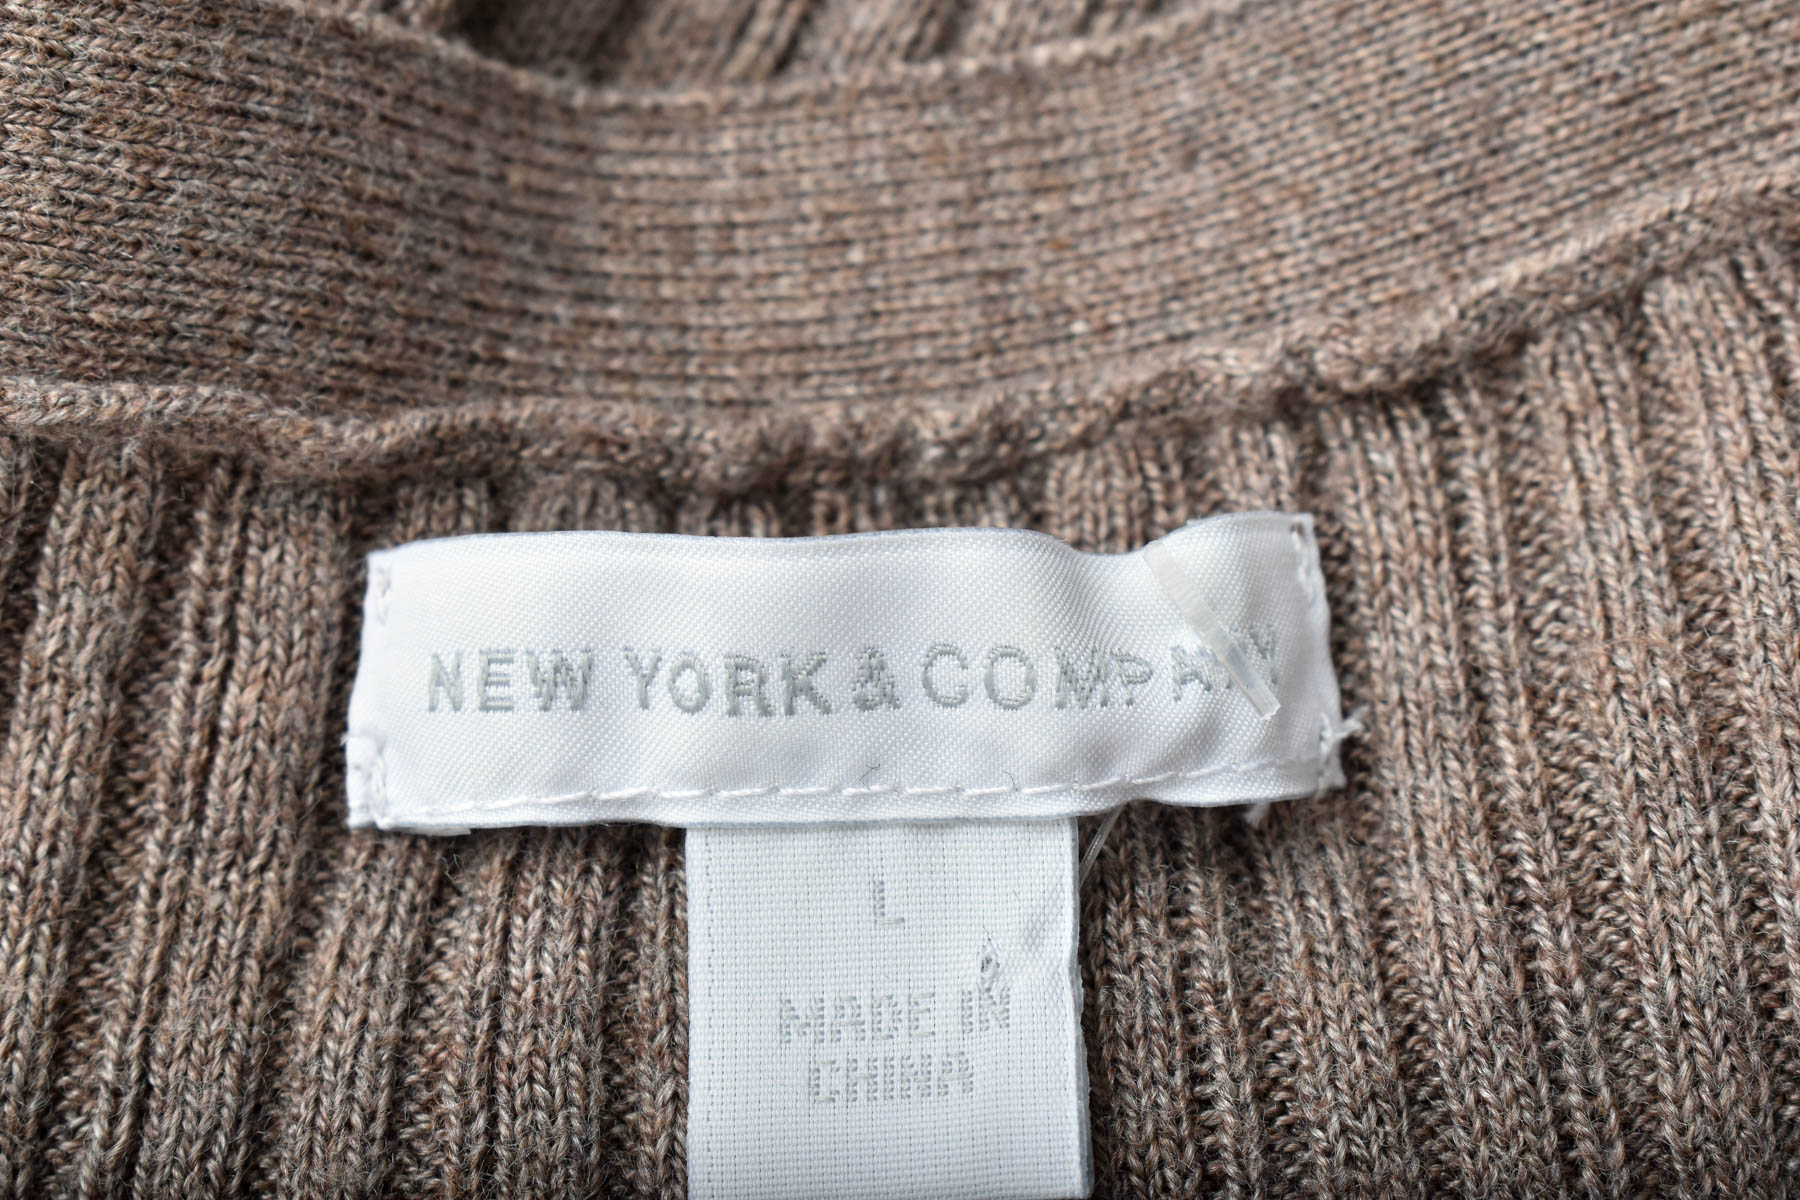 Cardigan / Jachetă de damă - New York & Company - 2